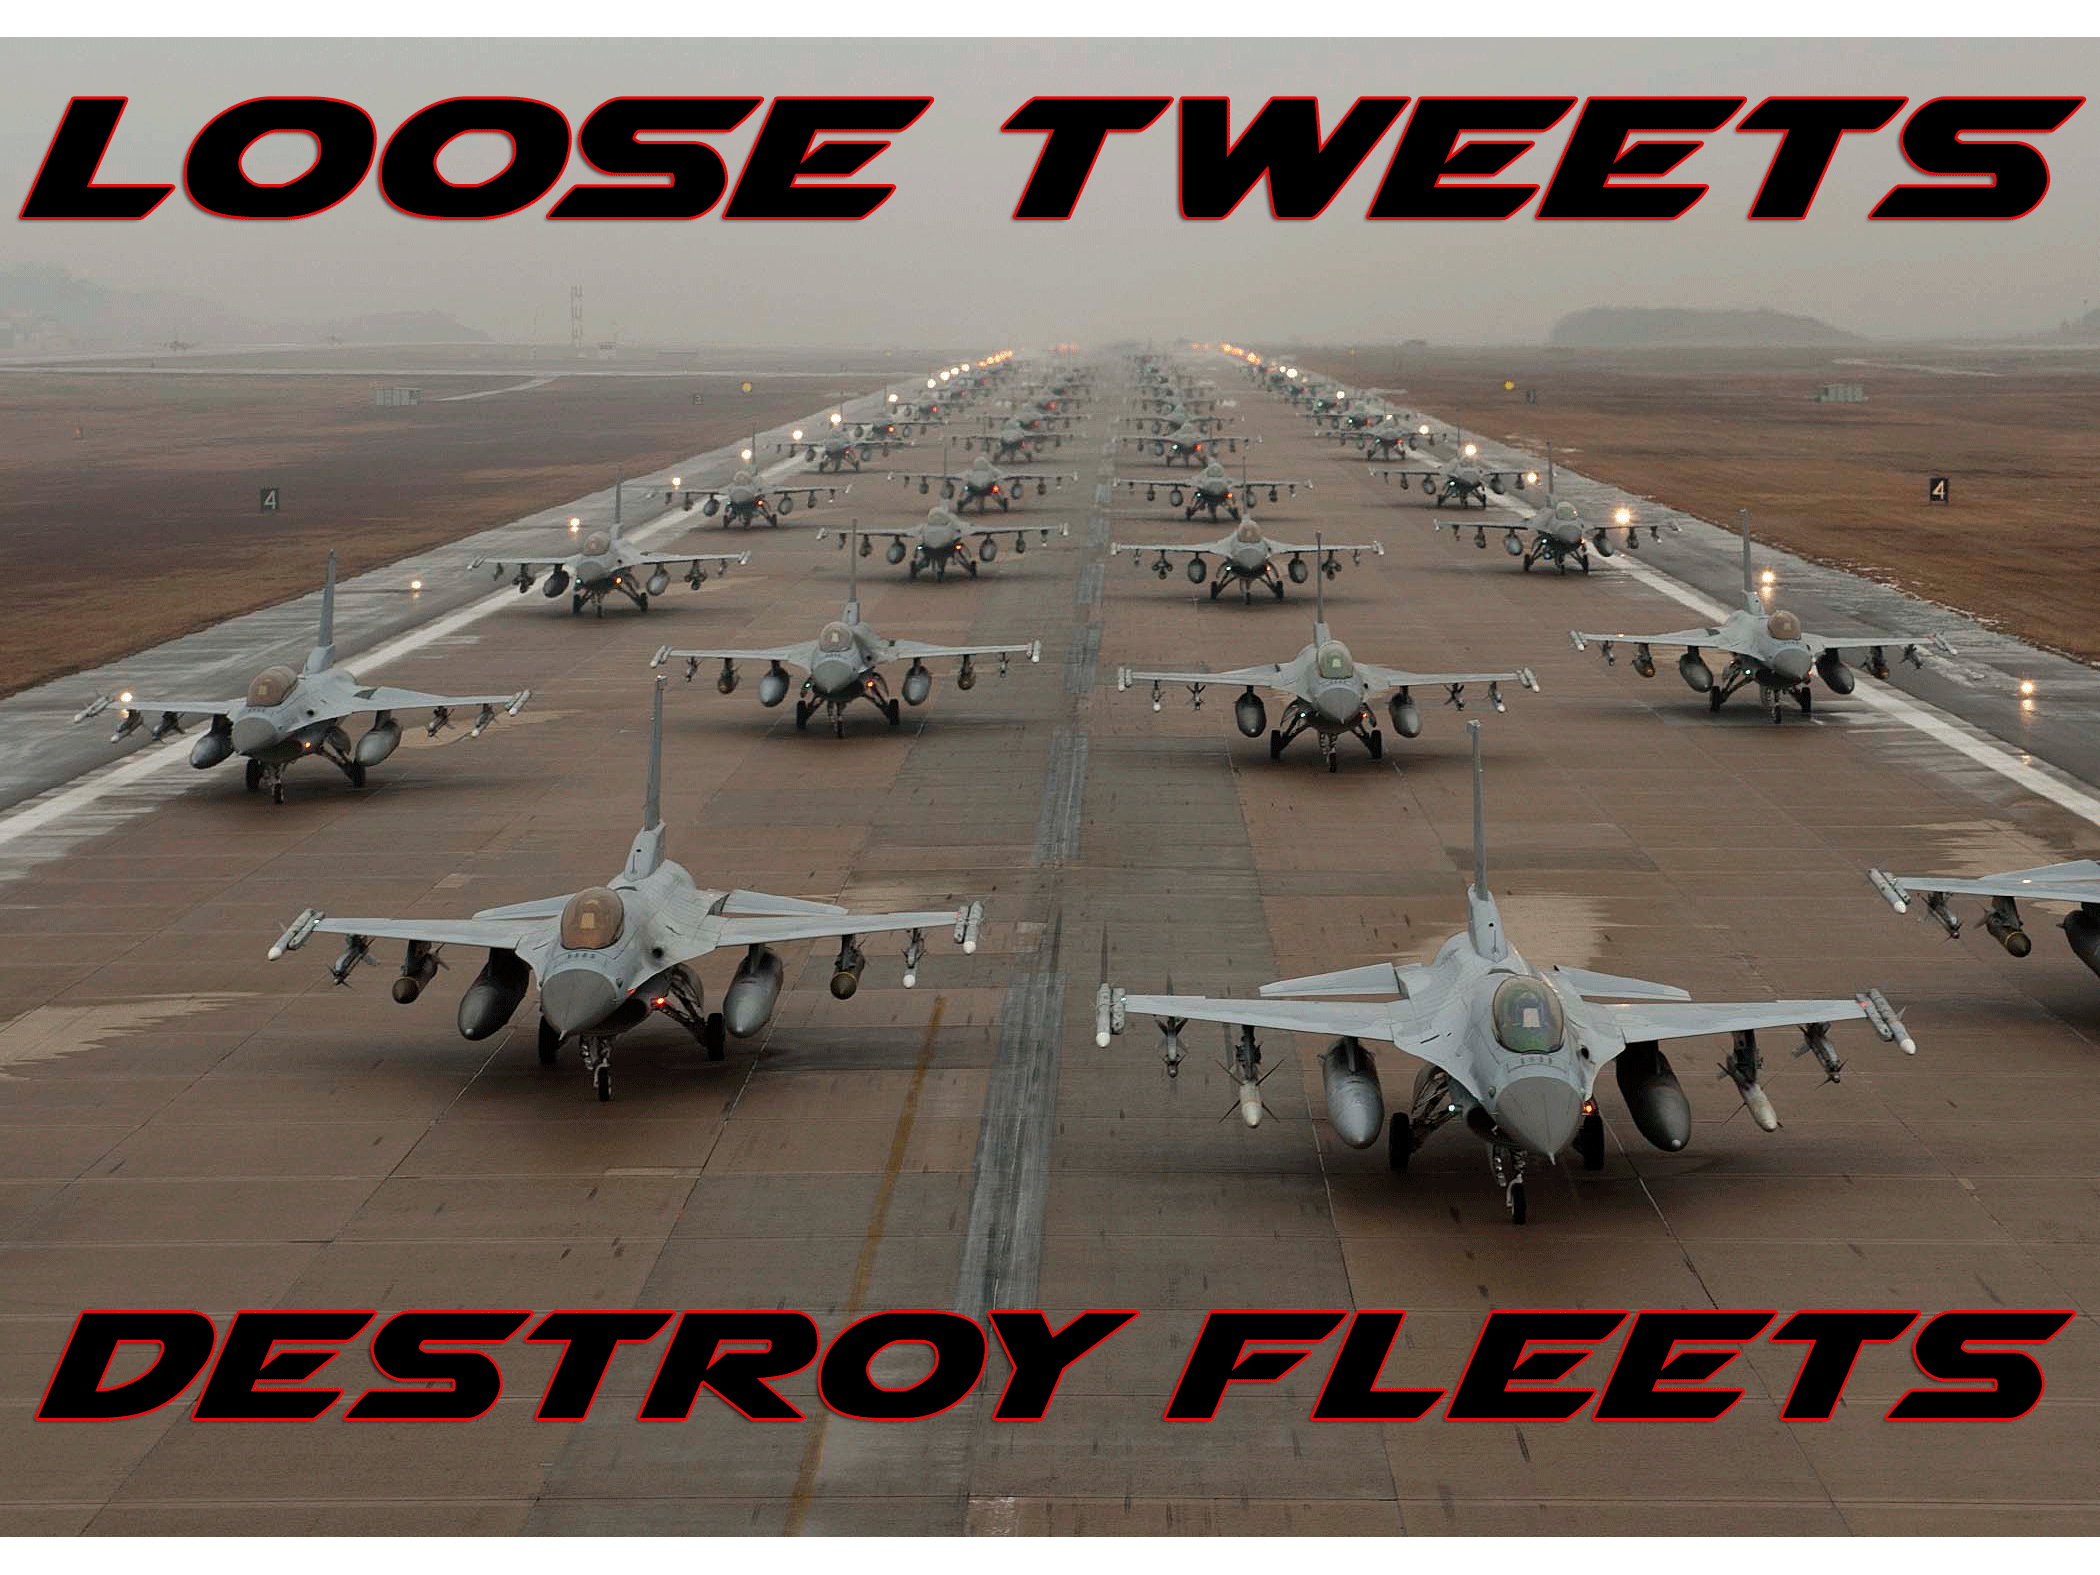 Loose tweets destroy fleets - US Air Force warns - Naked 